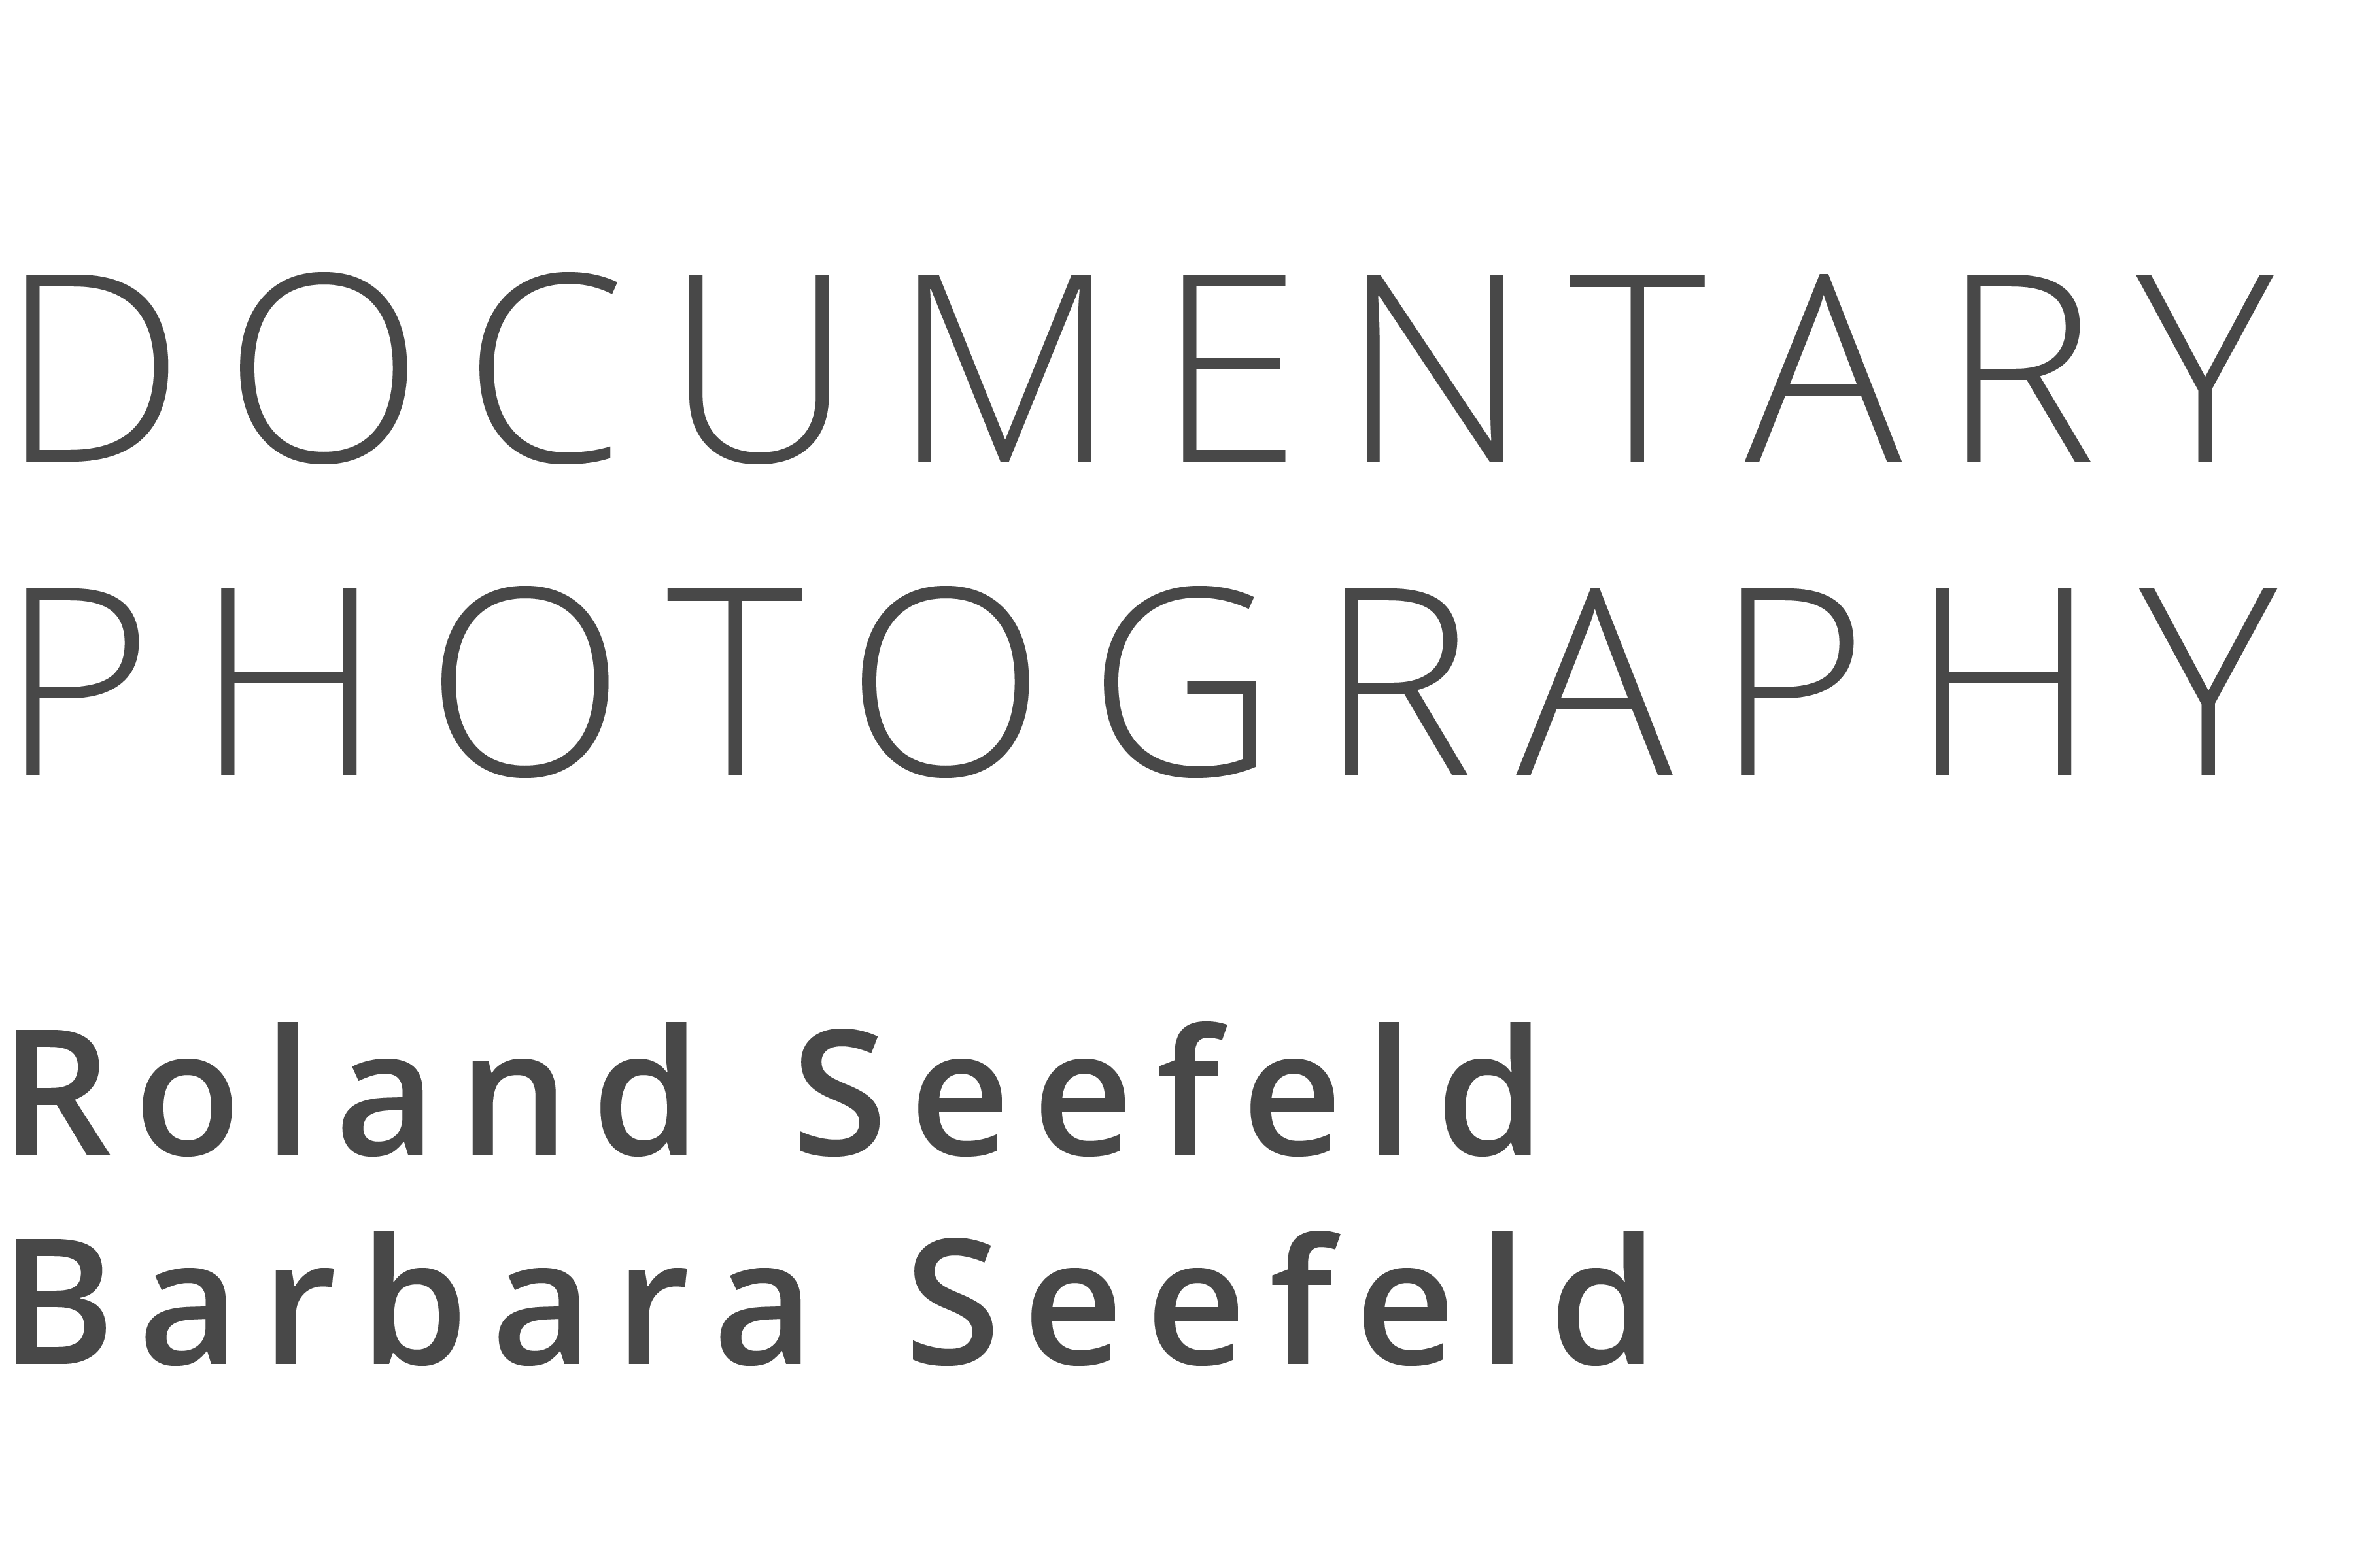 Documentary Photography